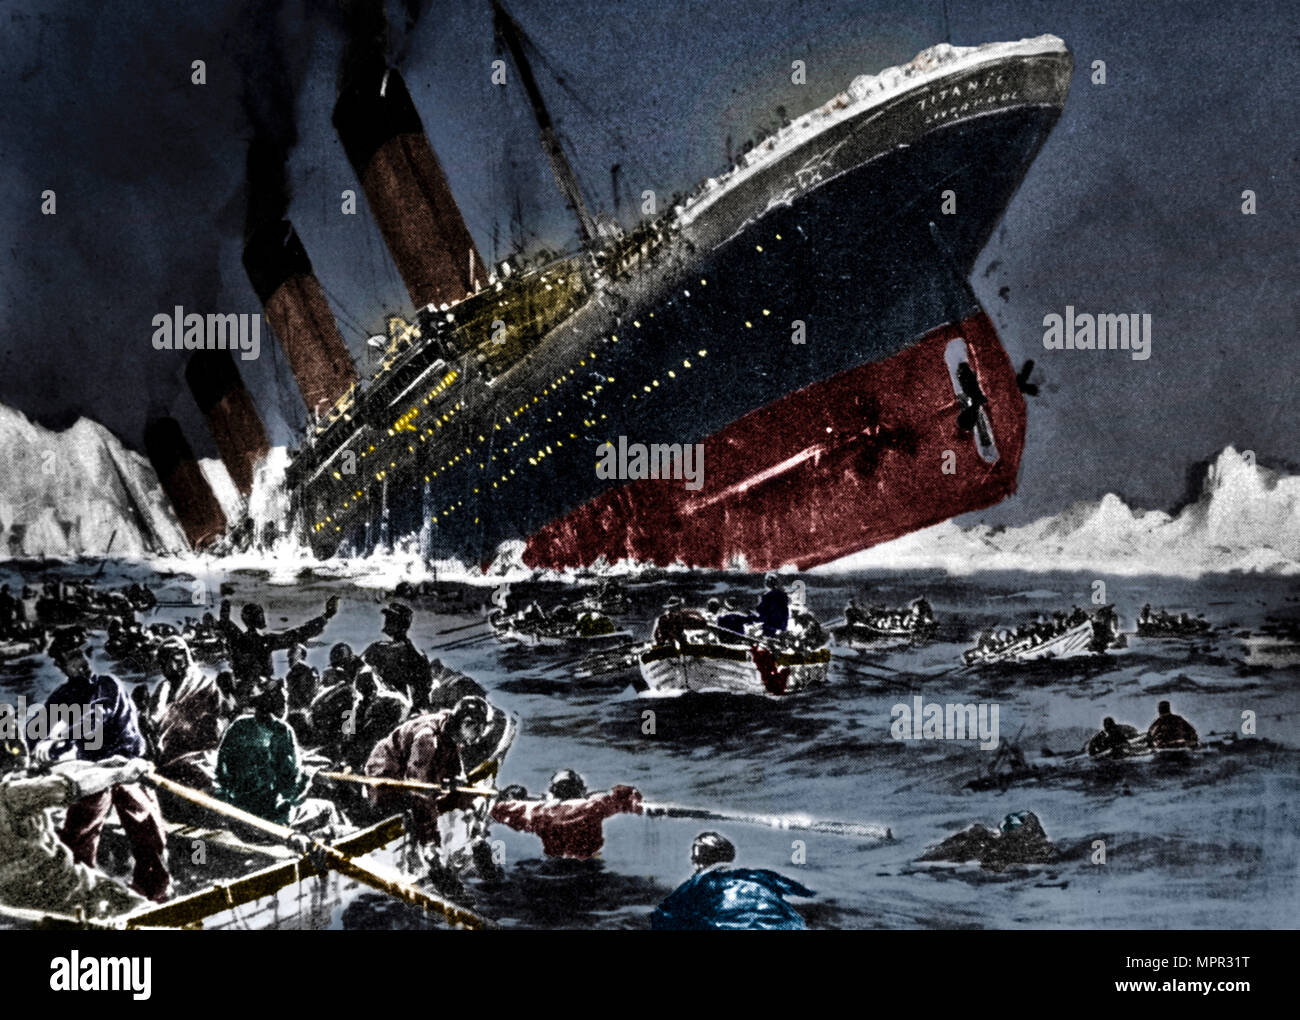 Le naufrage du SS Titanic, 14 avril 1912. Artiste : Inconnu. Banque D'Images